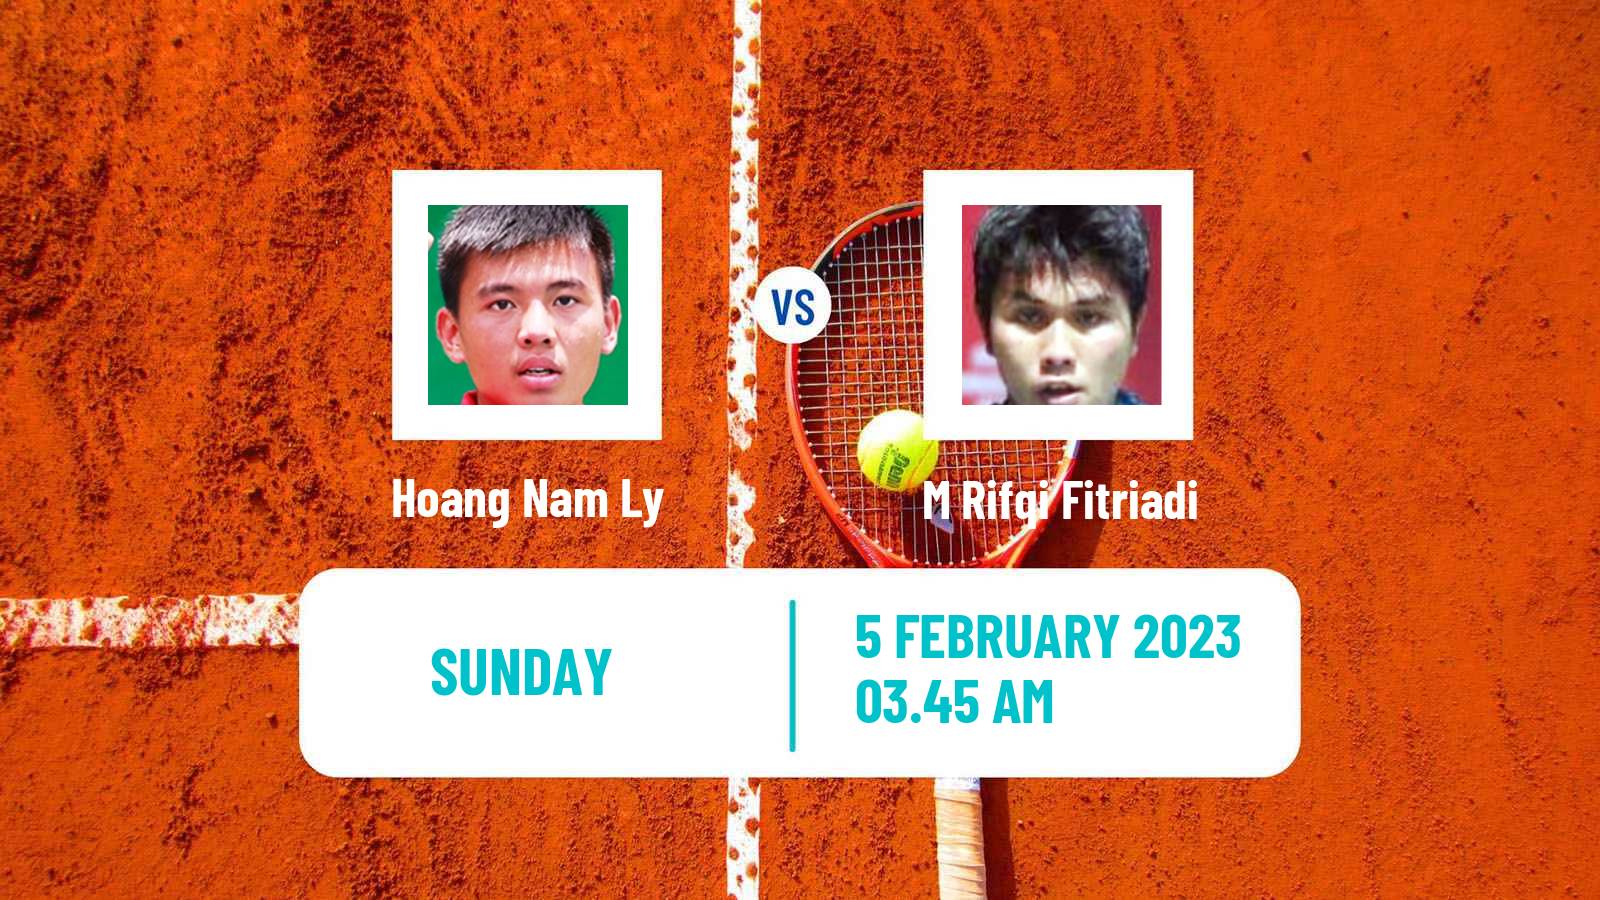 Tennis Davis Cup World Group II Hoang Nam Ly - M Rifqi Fitriadi